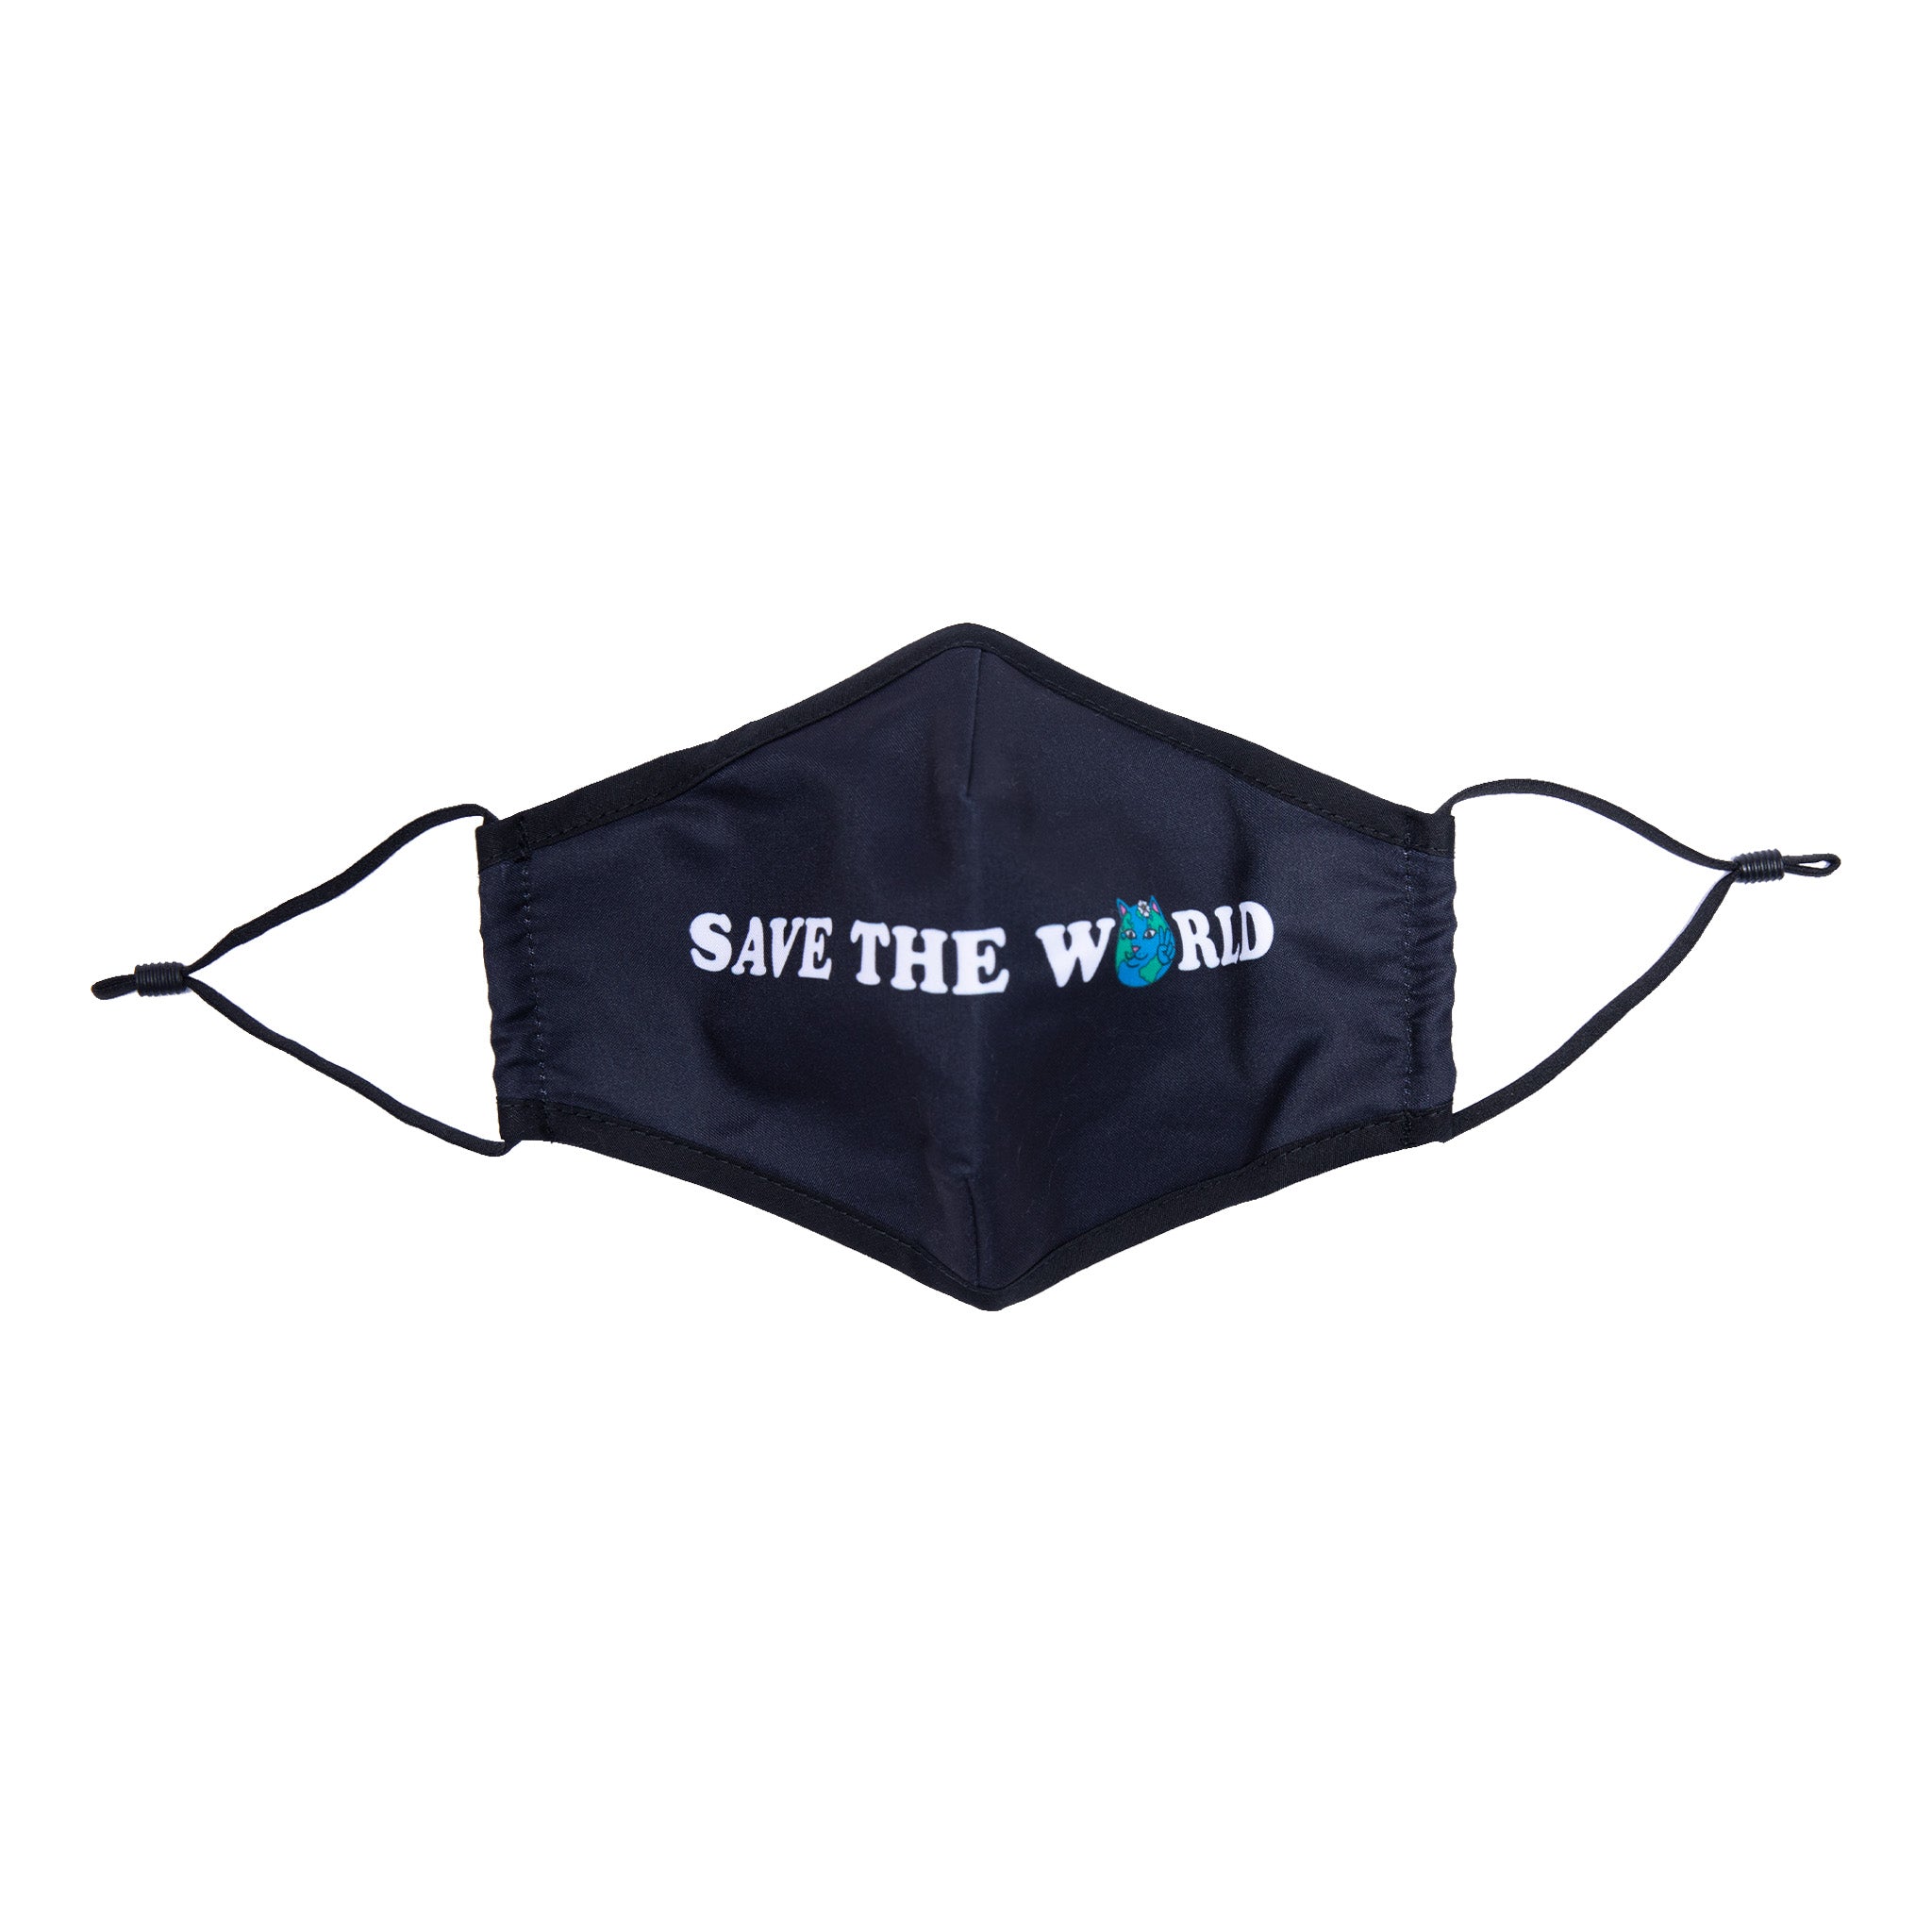 Save The World Mask (Black)